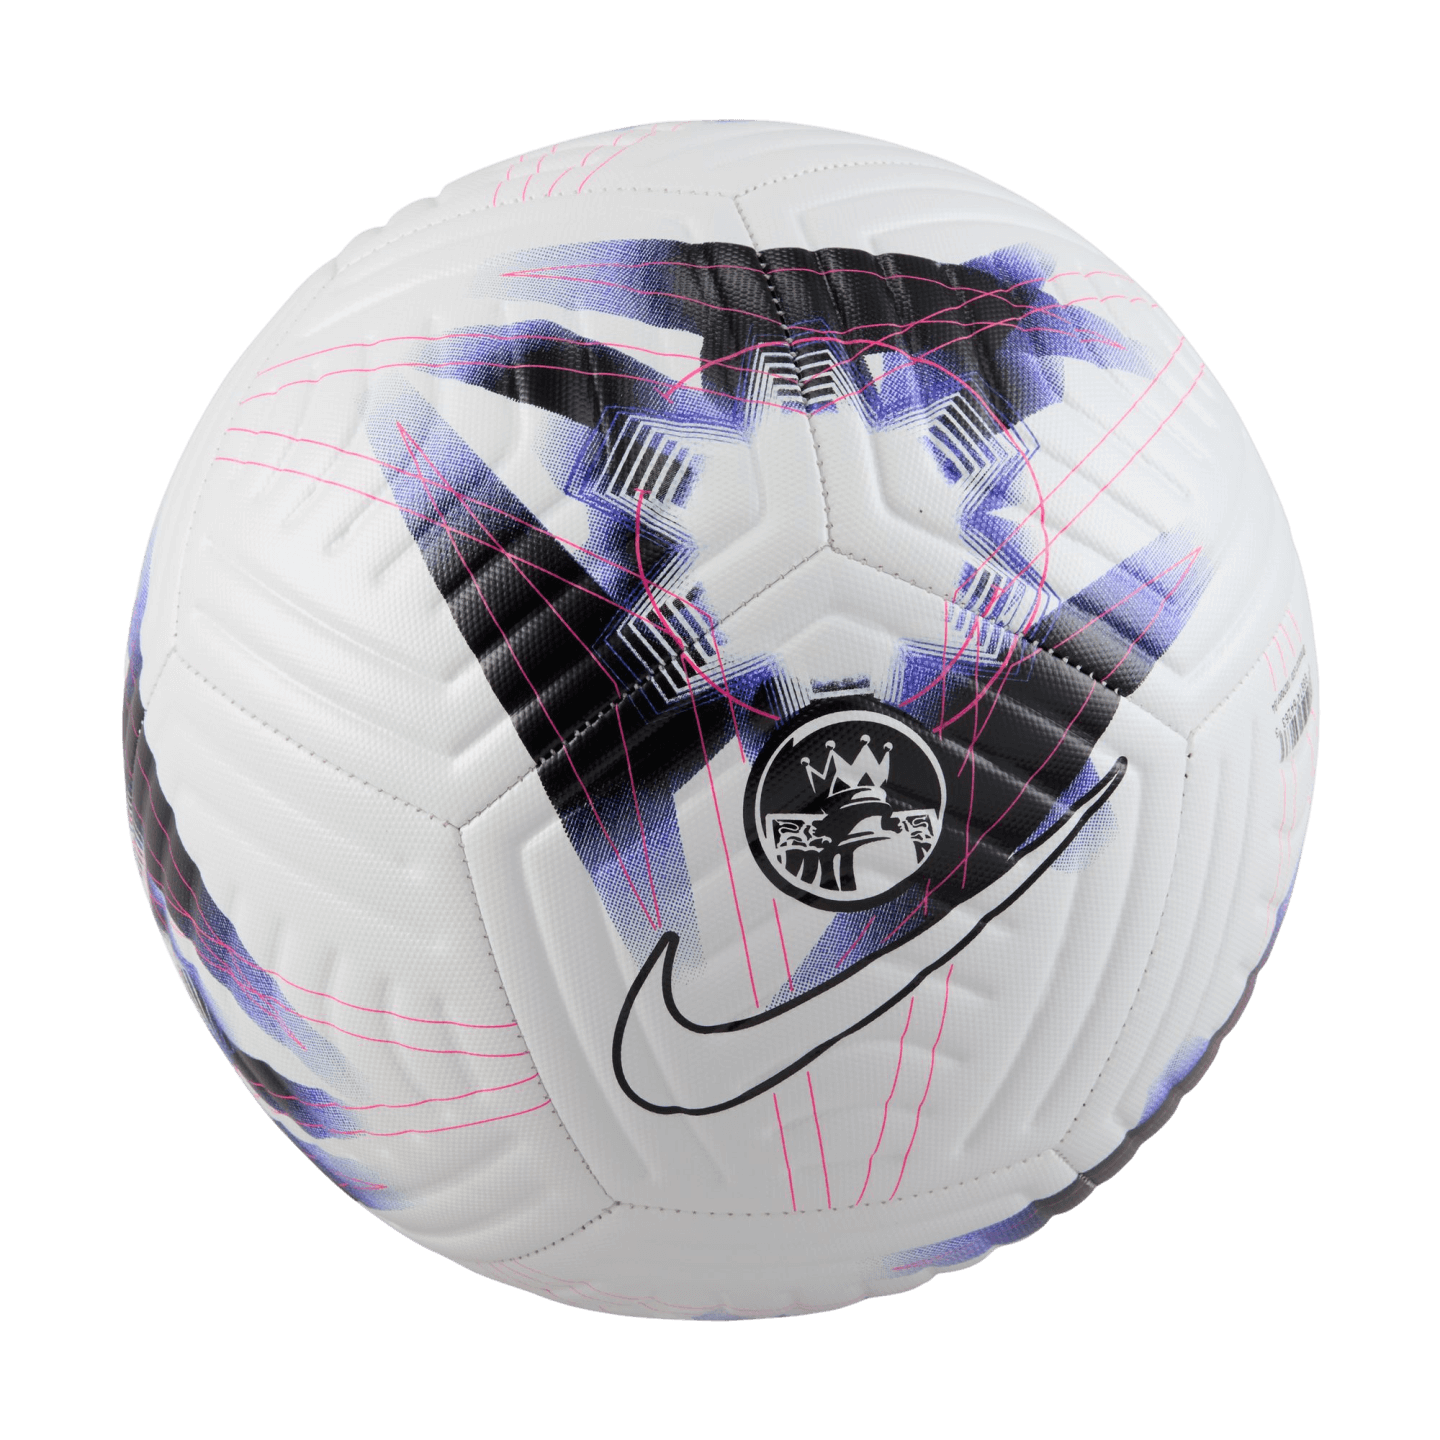 Nike Premier League Academy Ball